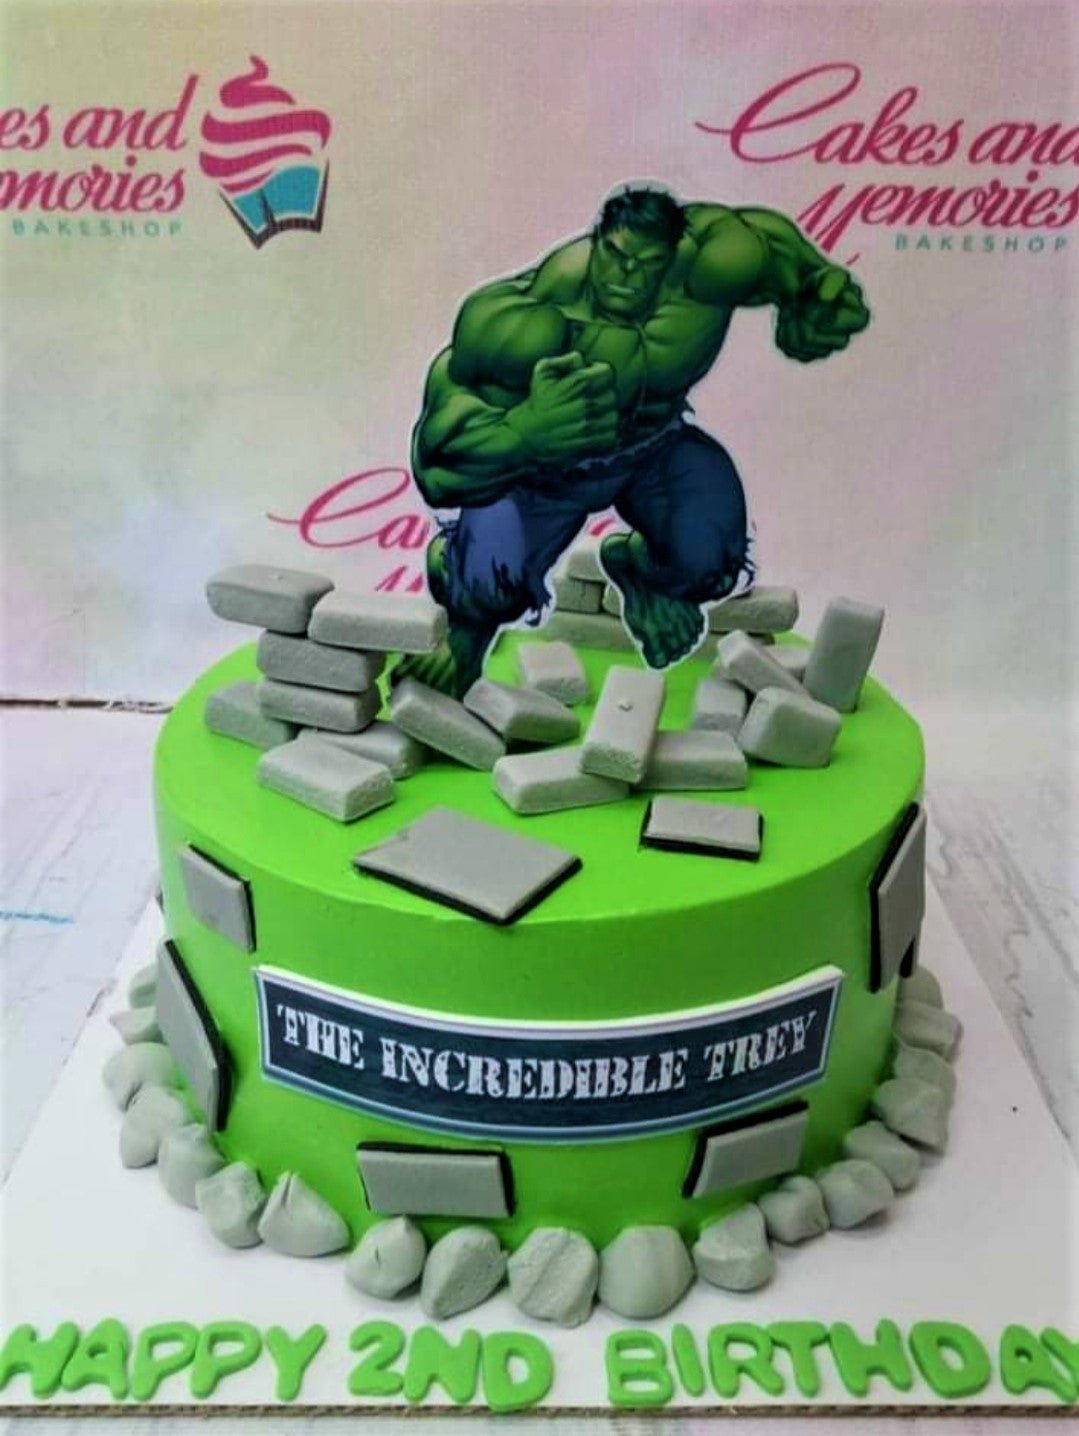 Marvel Celebration Cake - ASDA Groceries